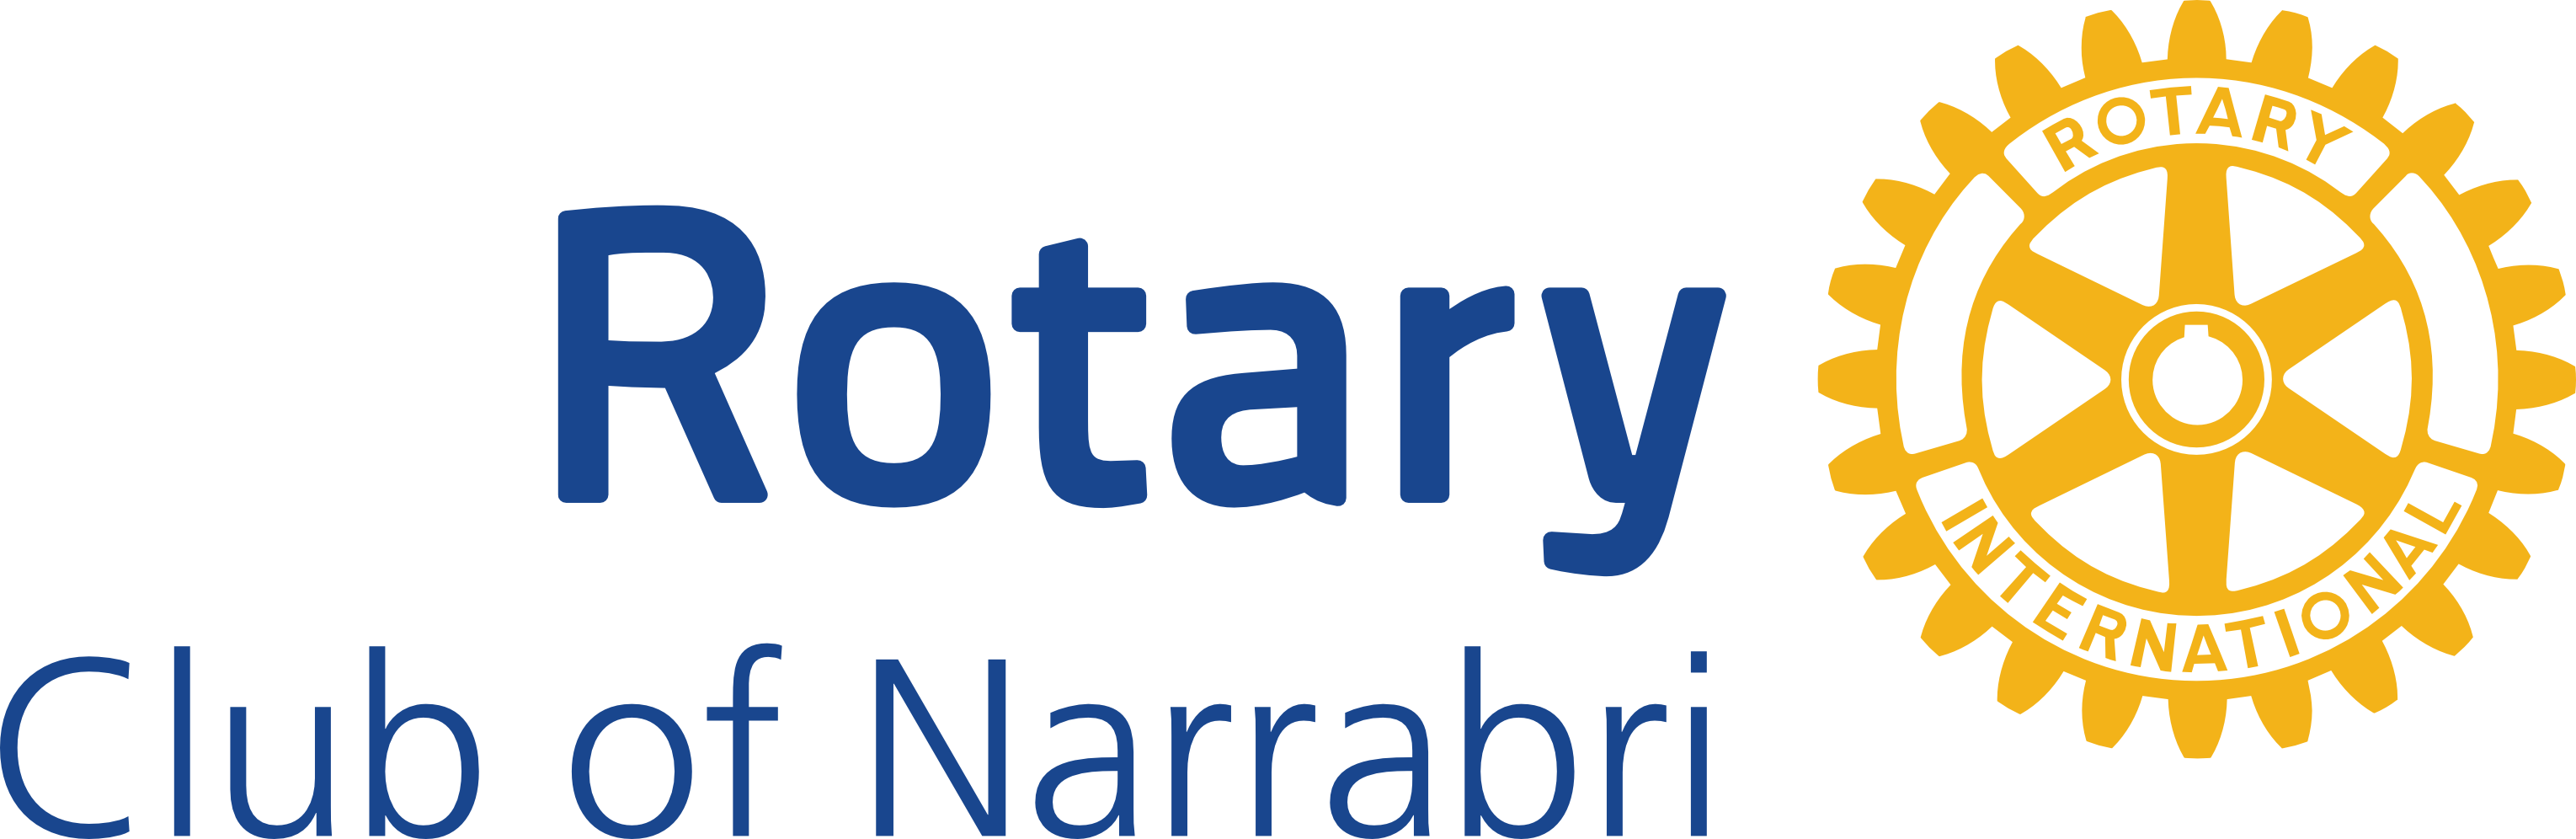 Rotary Club of Narrabri